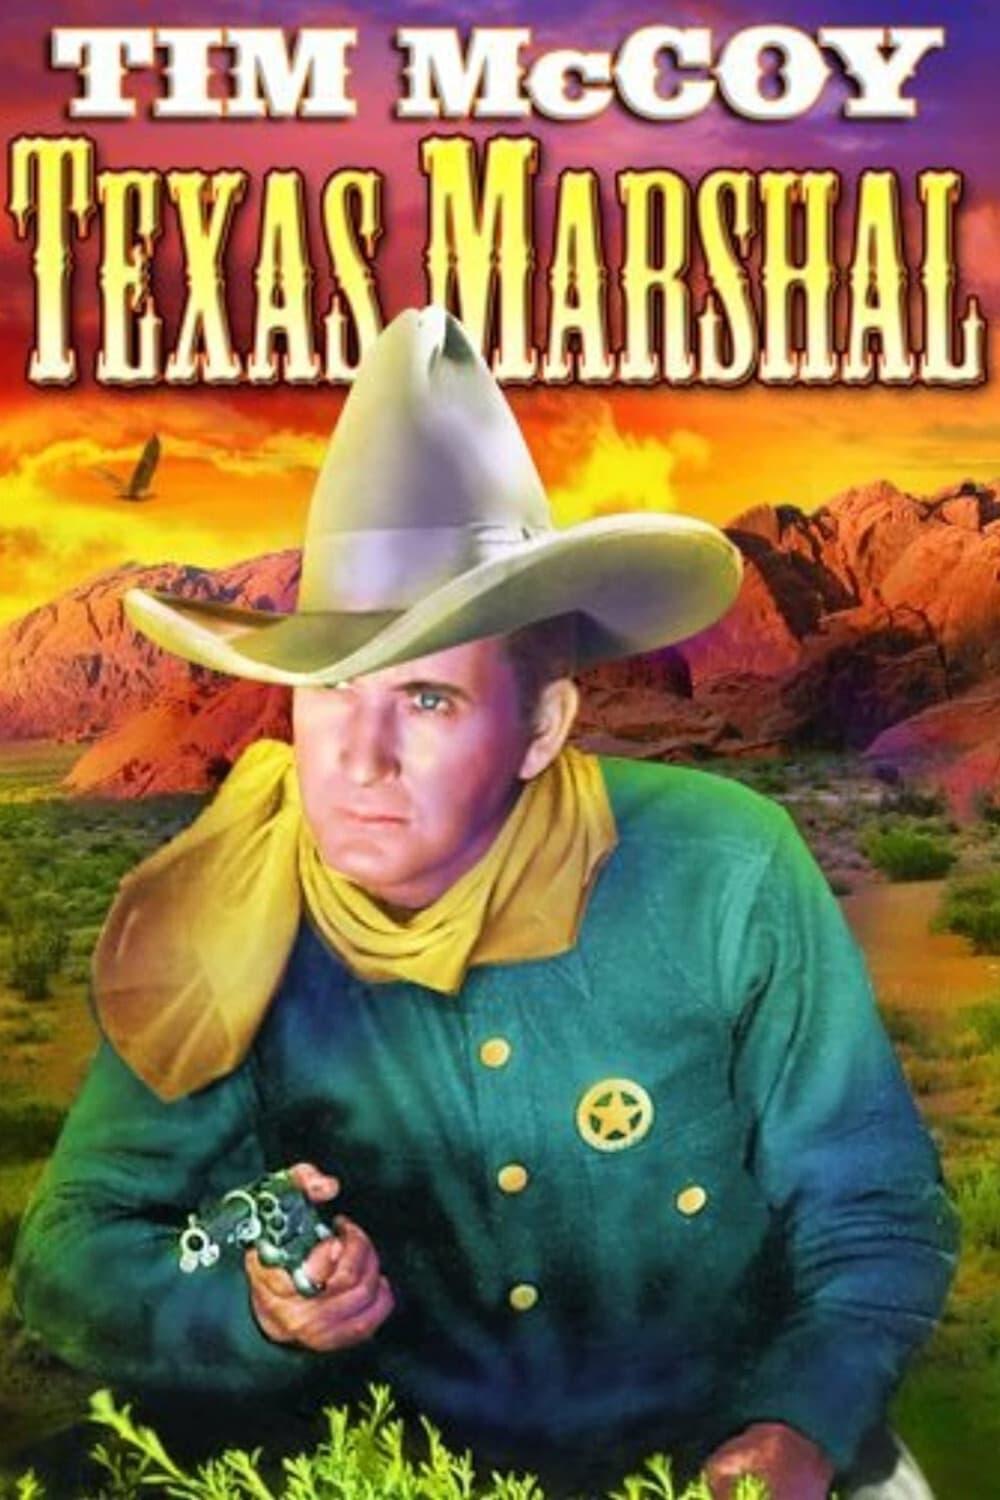 The Texas Marshal poster